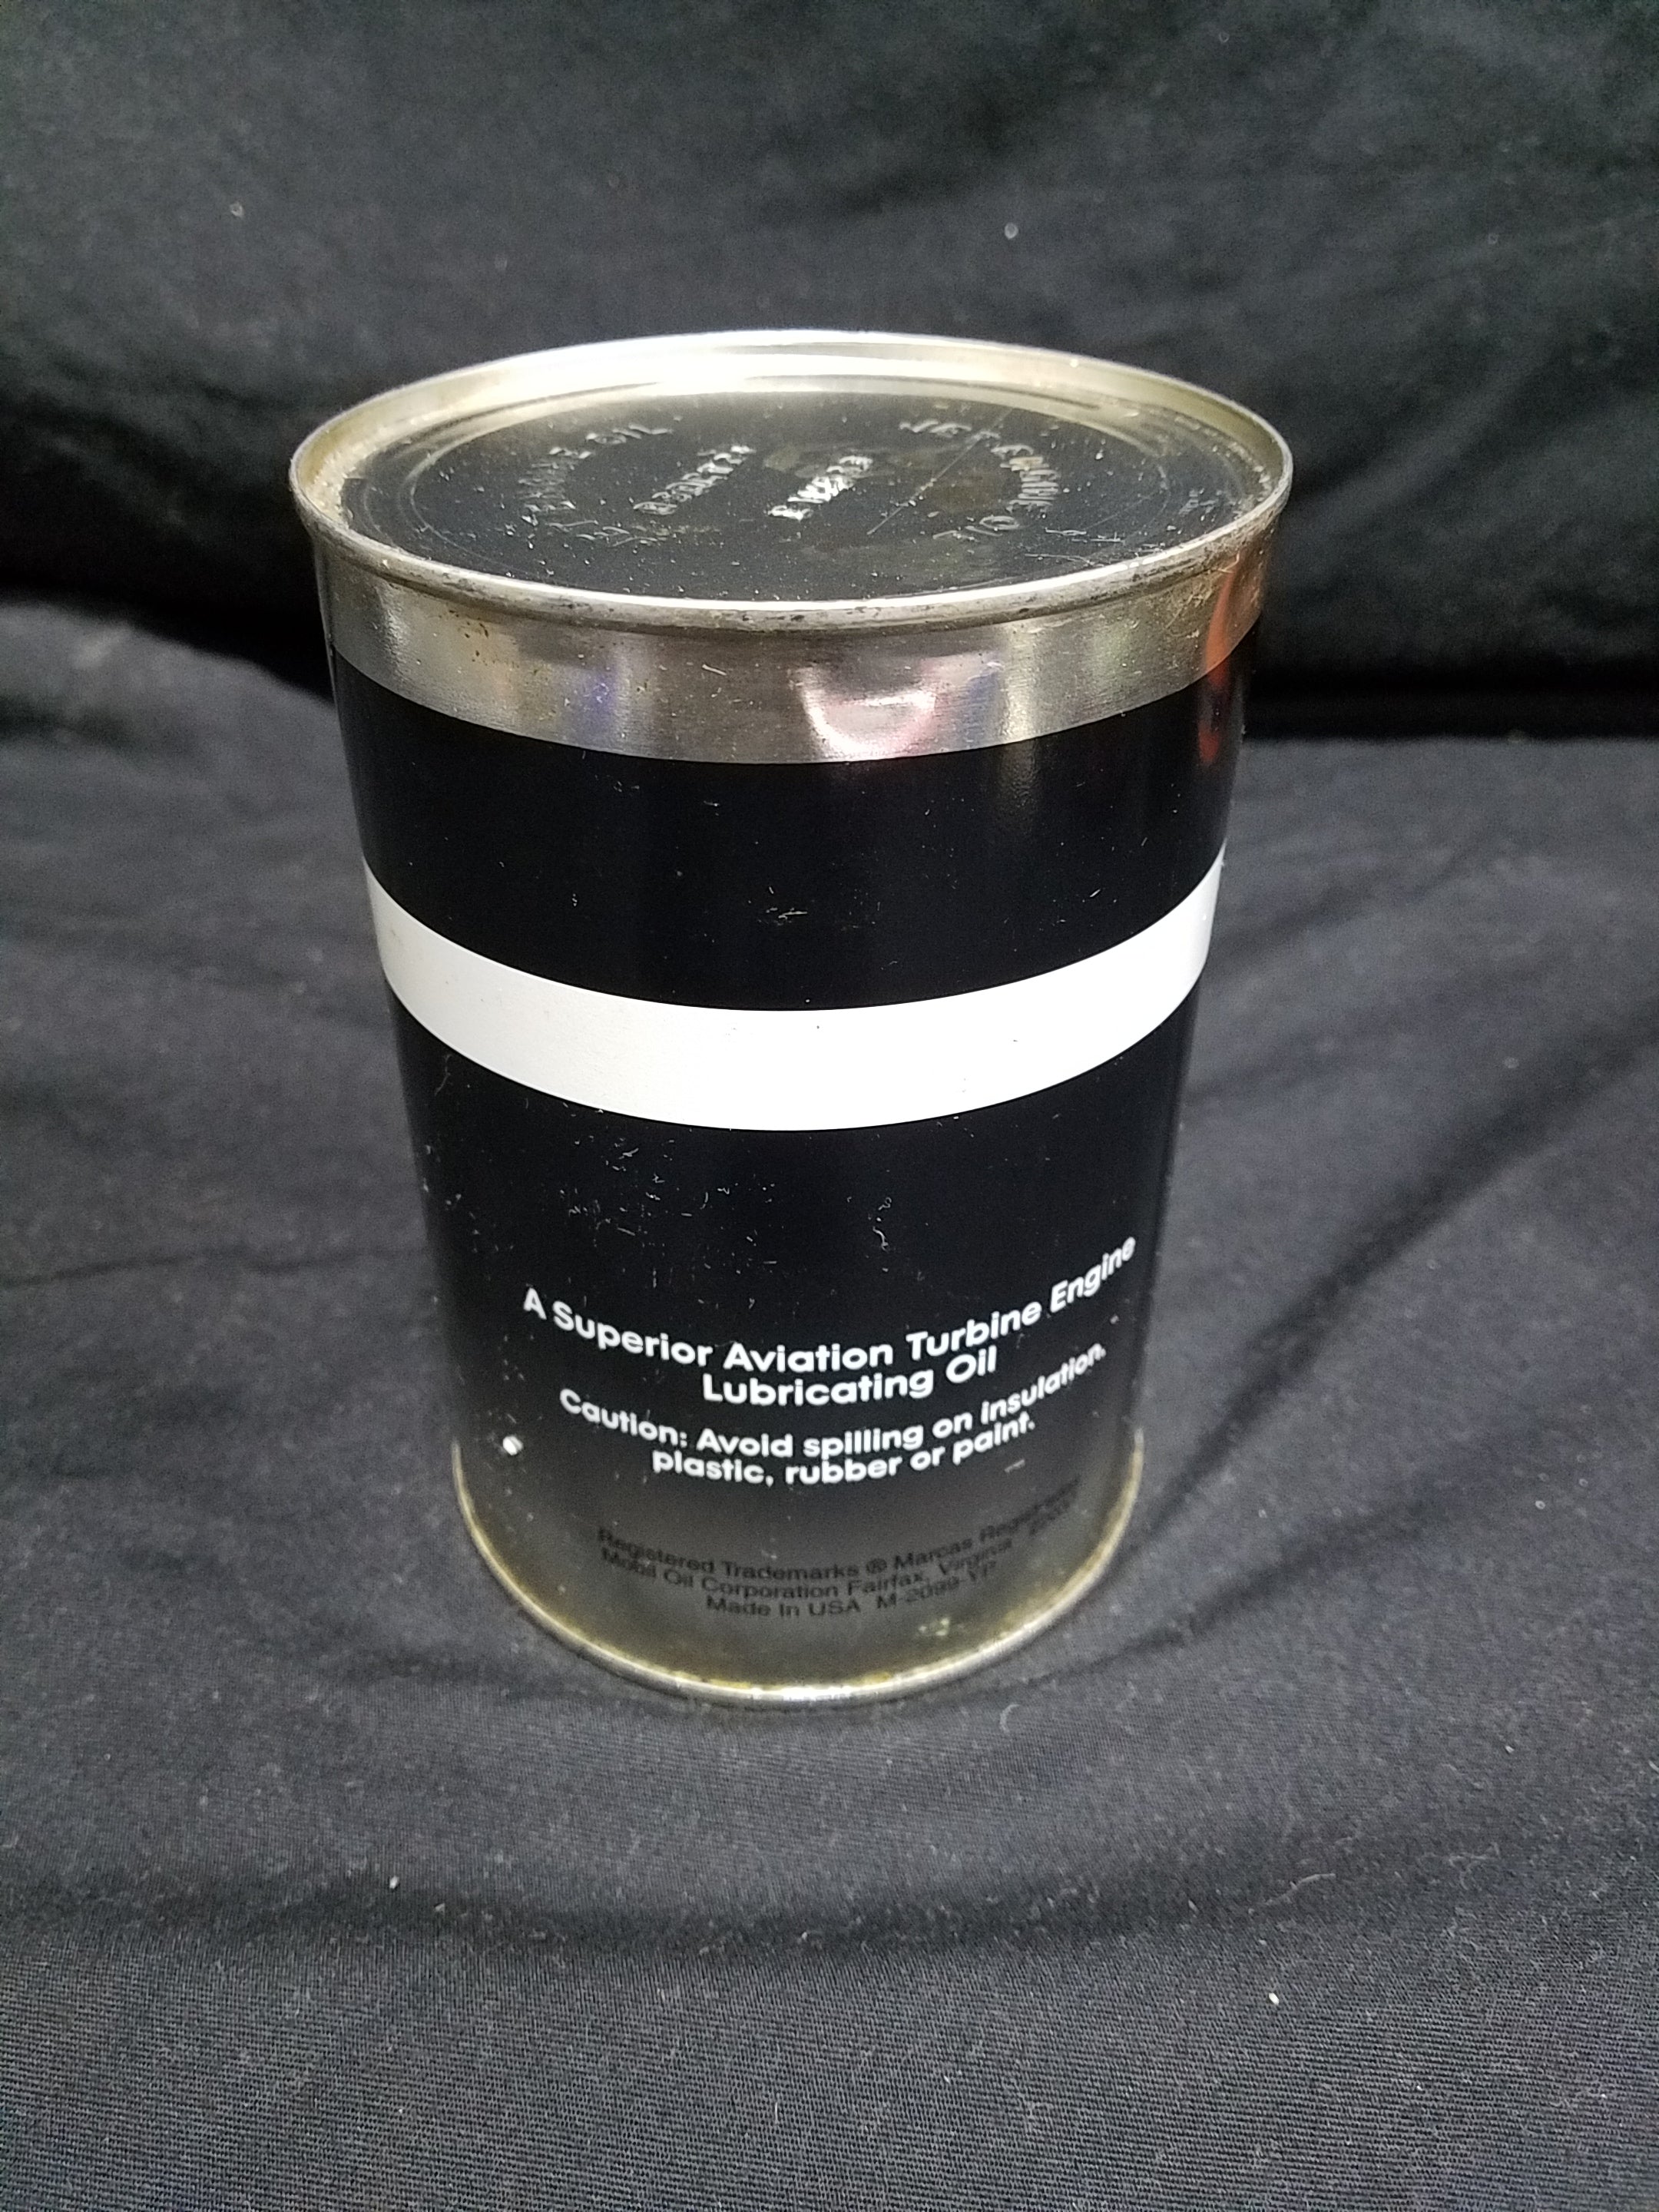 Mobil Jet Oil 291 Full Quart Metal Oil Can (Black Label)